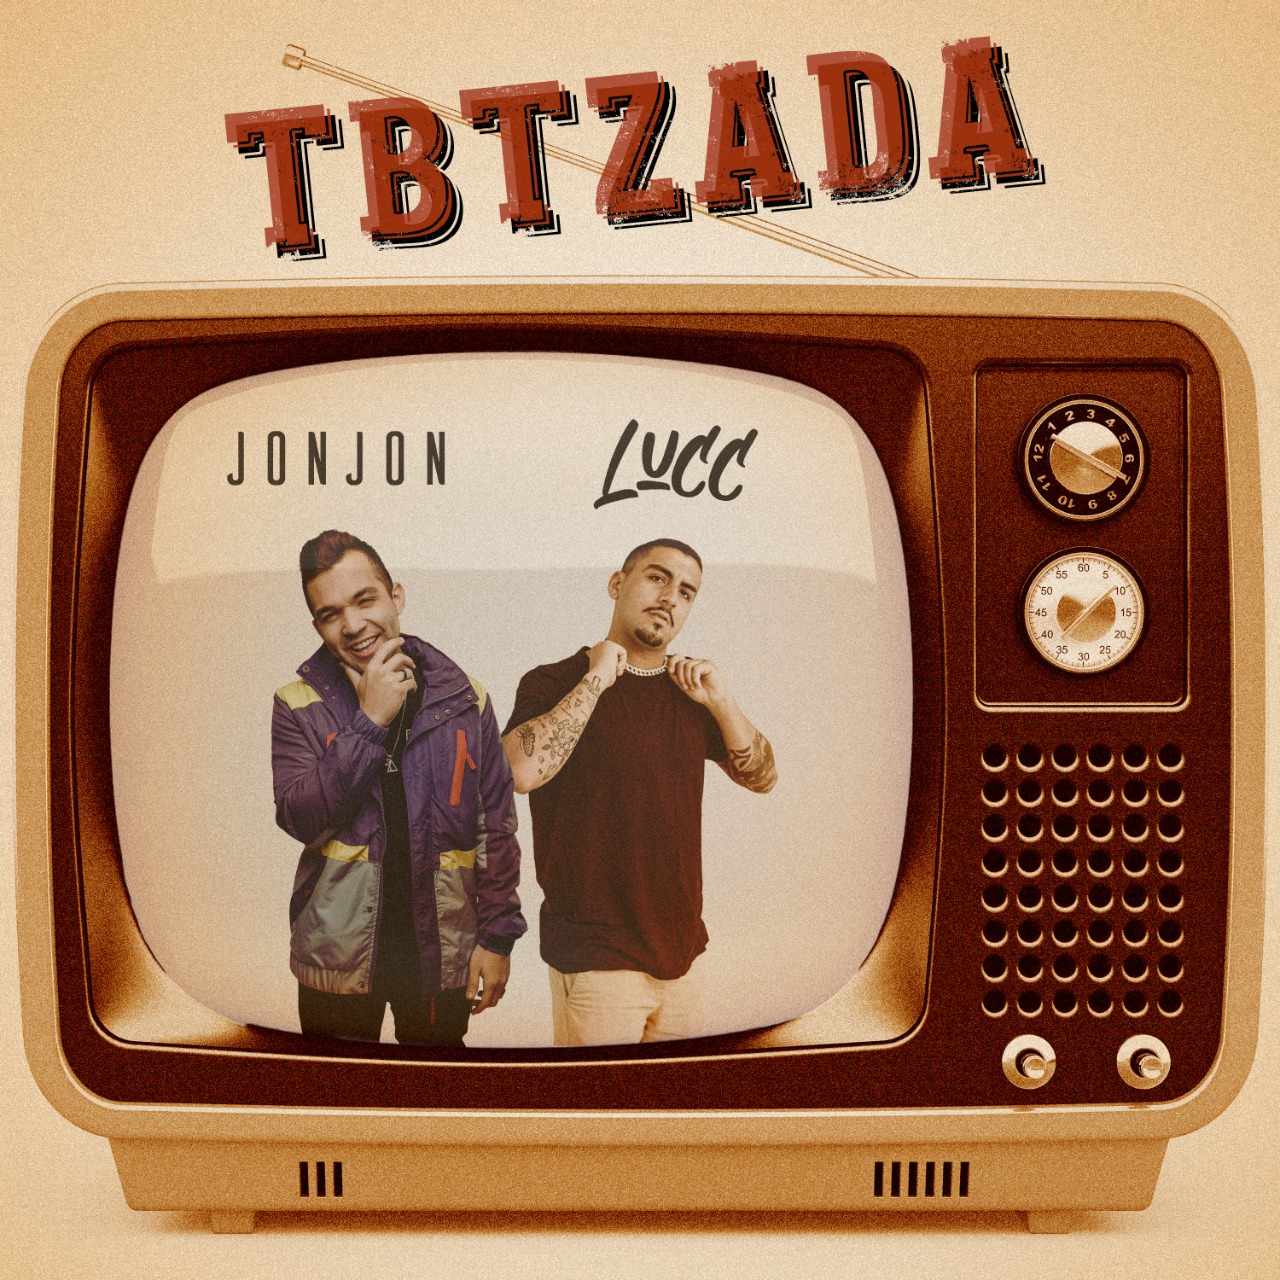 'Tbtzada': Jon Jon entra na brincadeira do Instagram e lança nova música